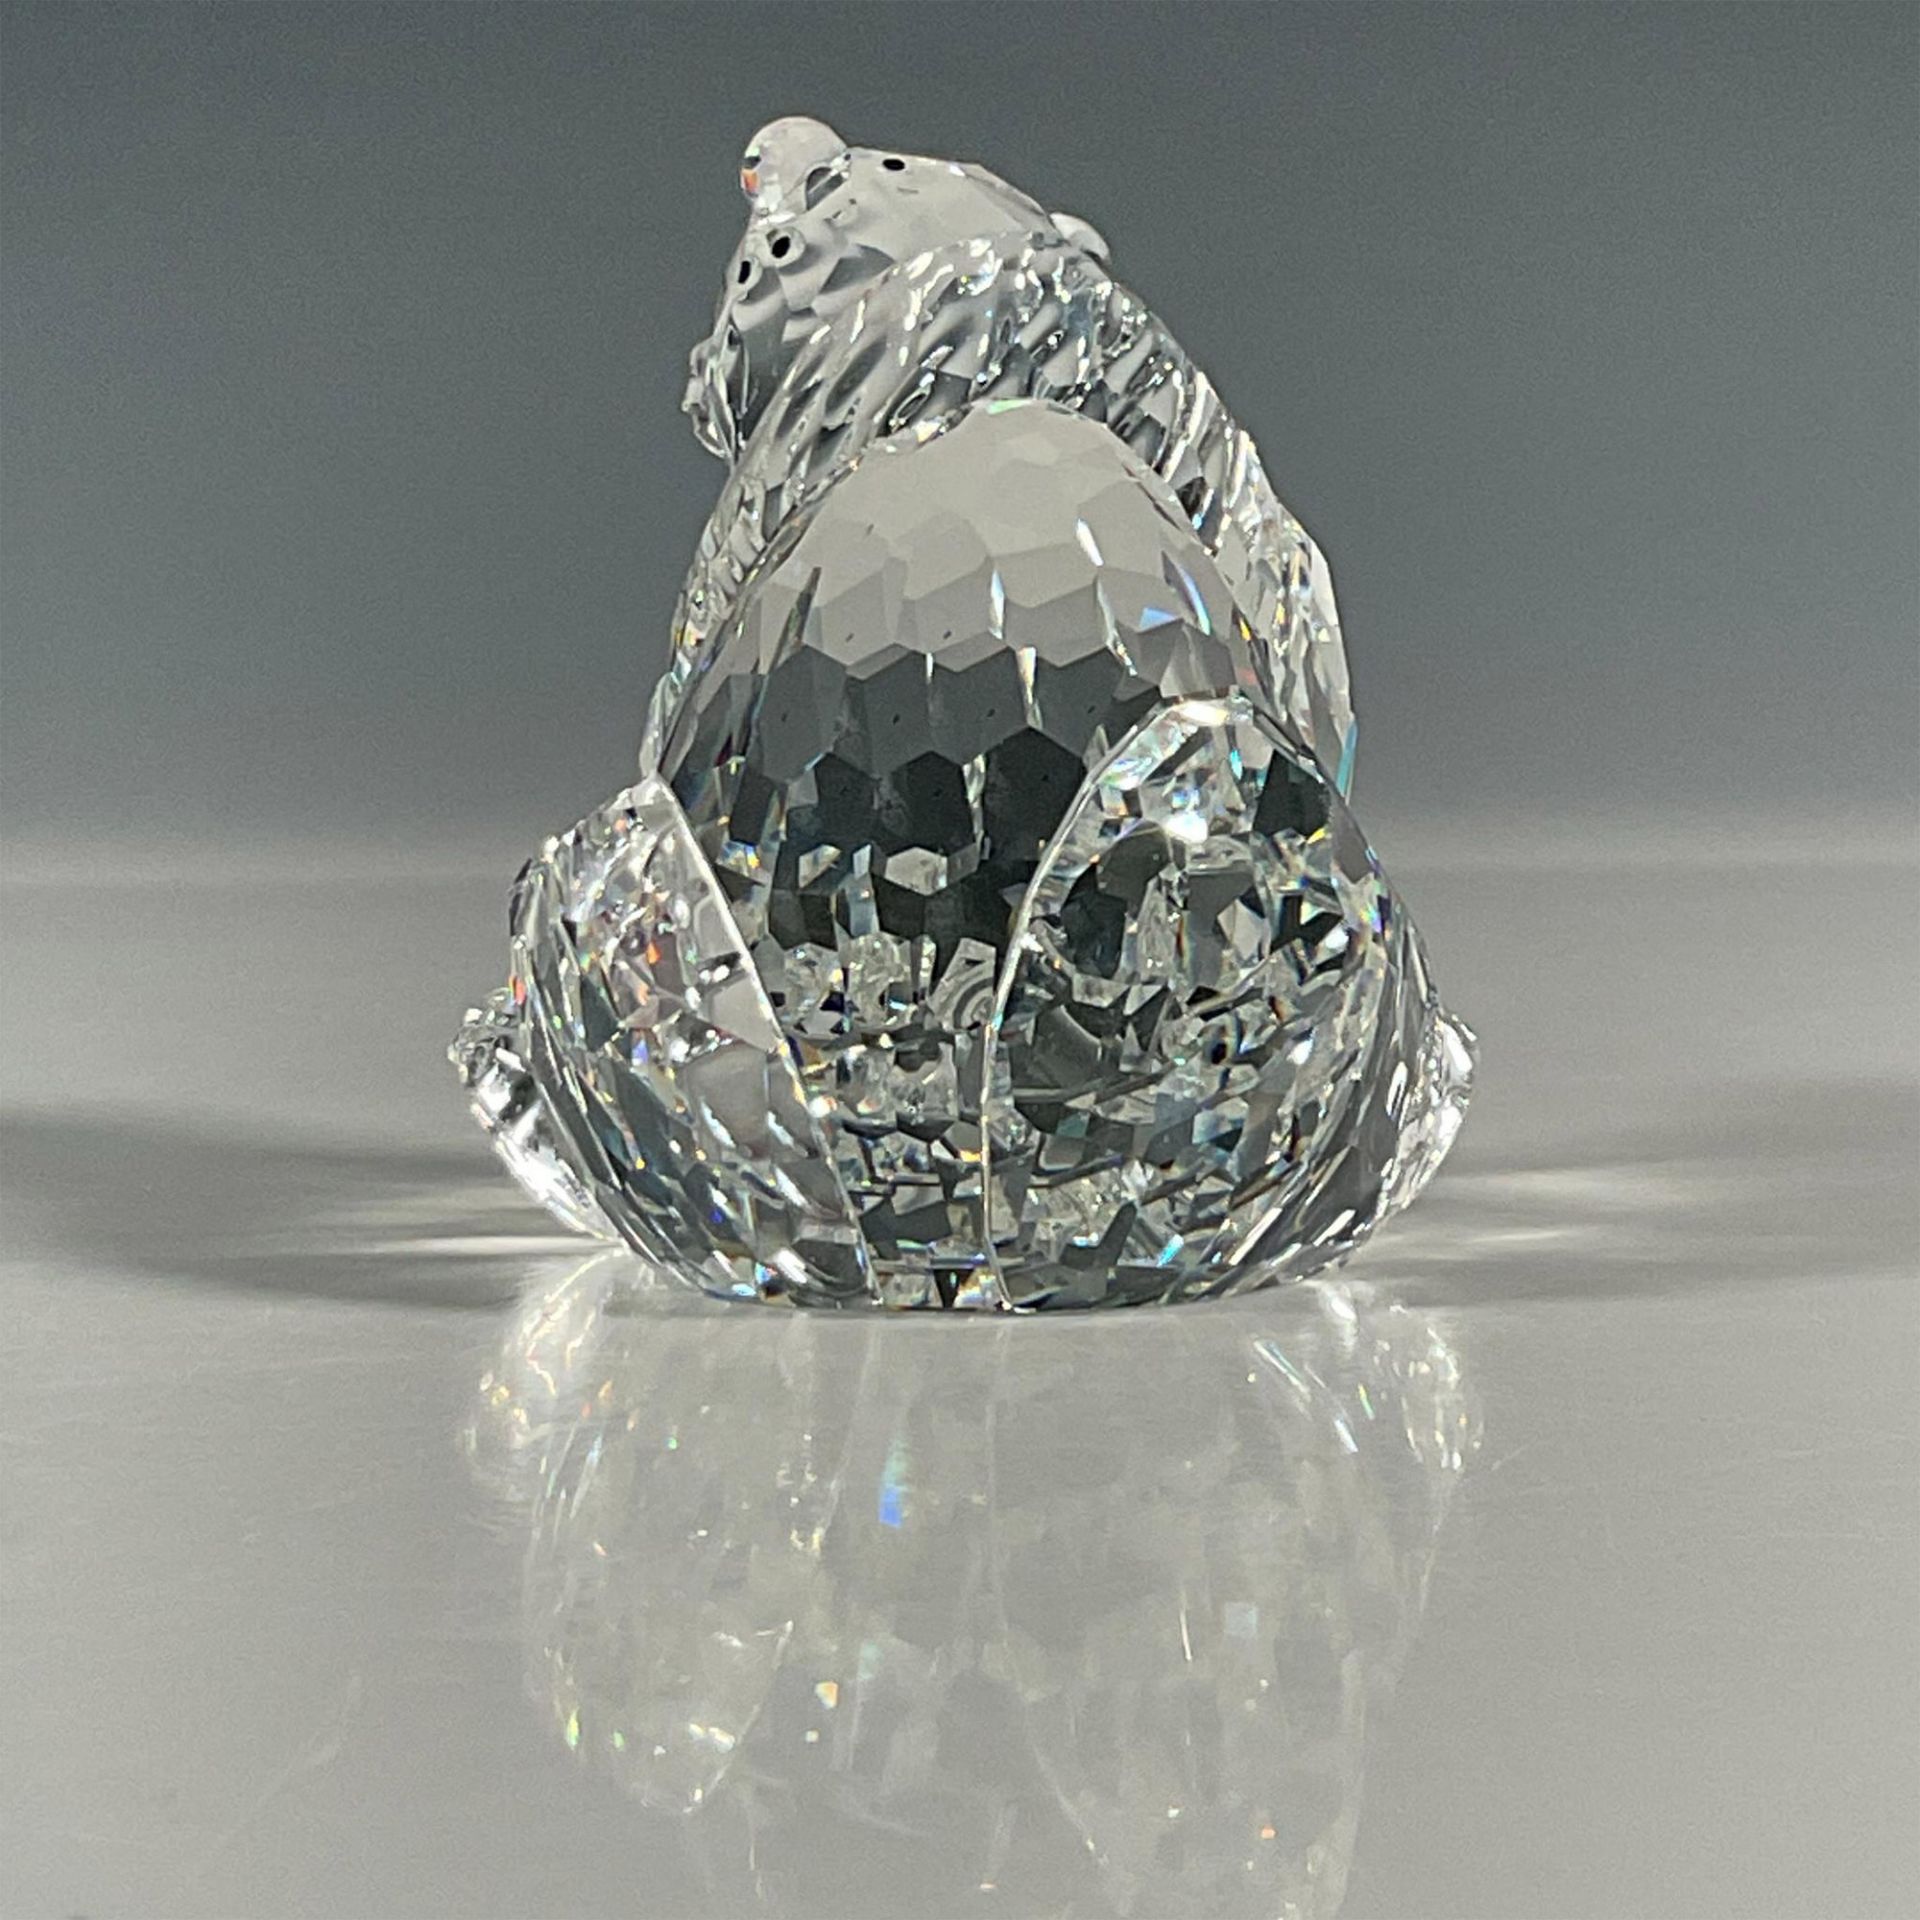 Swarovski Silver Crystal Figurine, Grizzly - Image 3 of 4